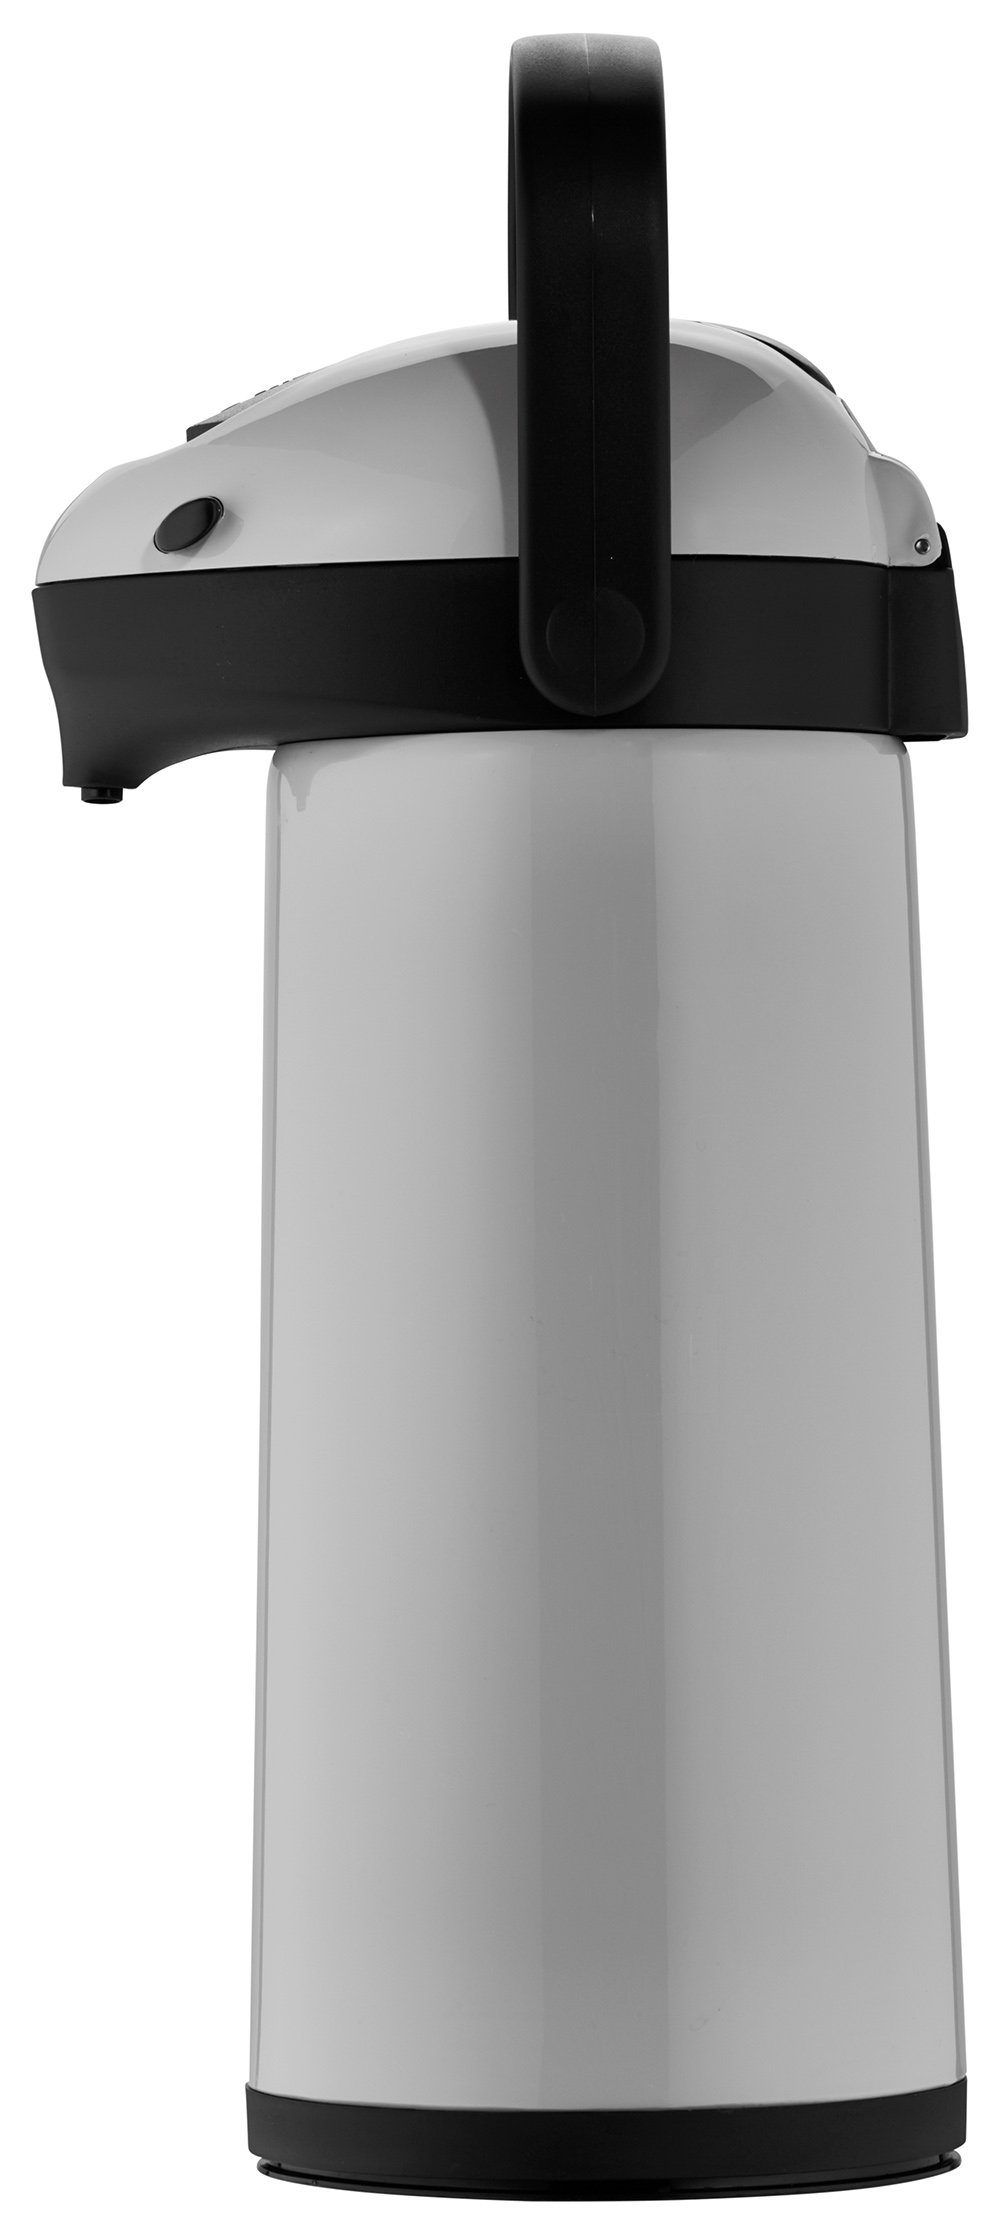 l Helios Airpot, grau/schwarz Pump-Isolierkanne 1.9